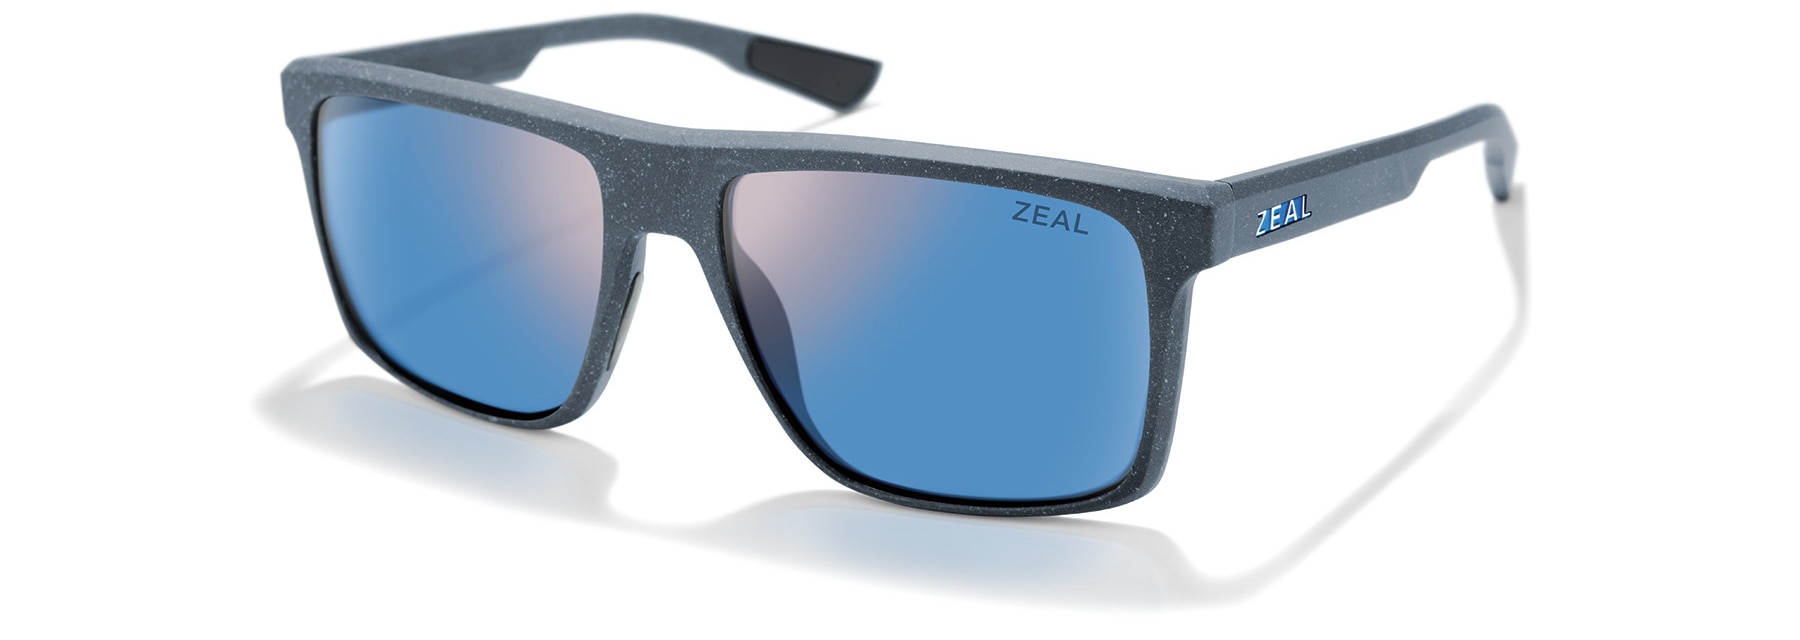 Shop DIVIDE (Z1838) Sunglasses by Zeal | Zeal Optics